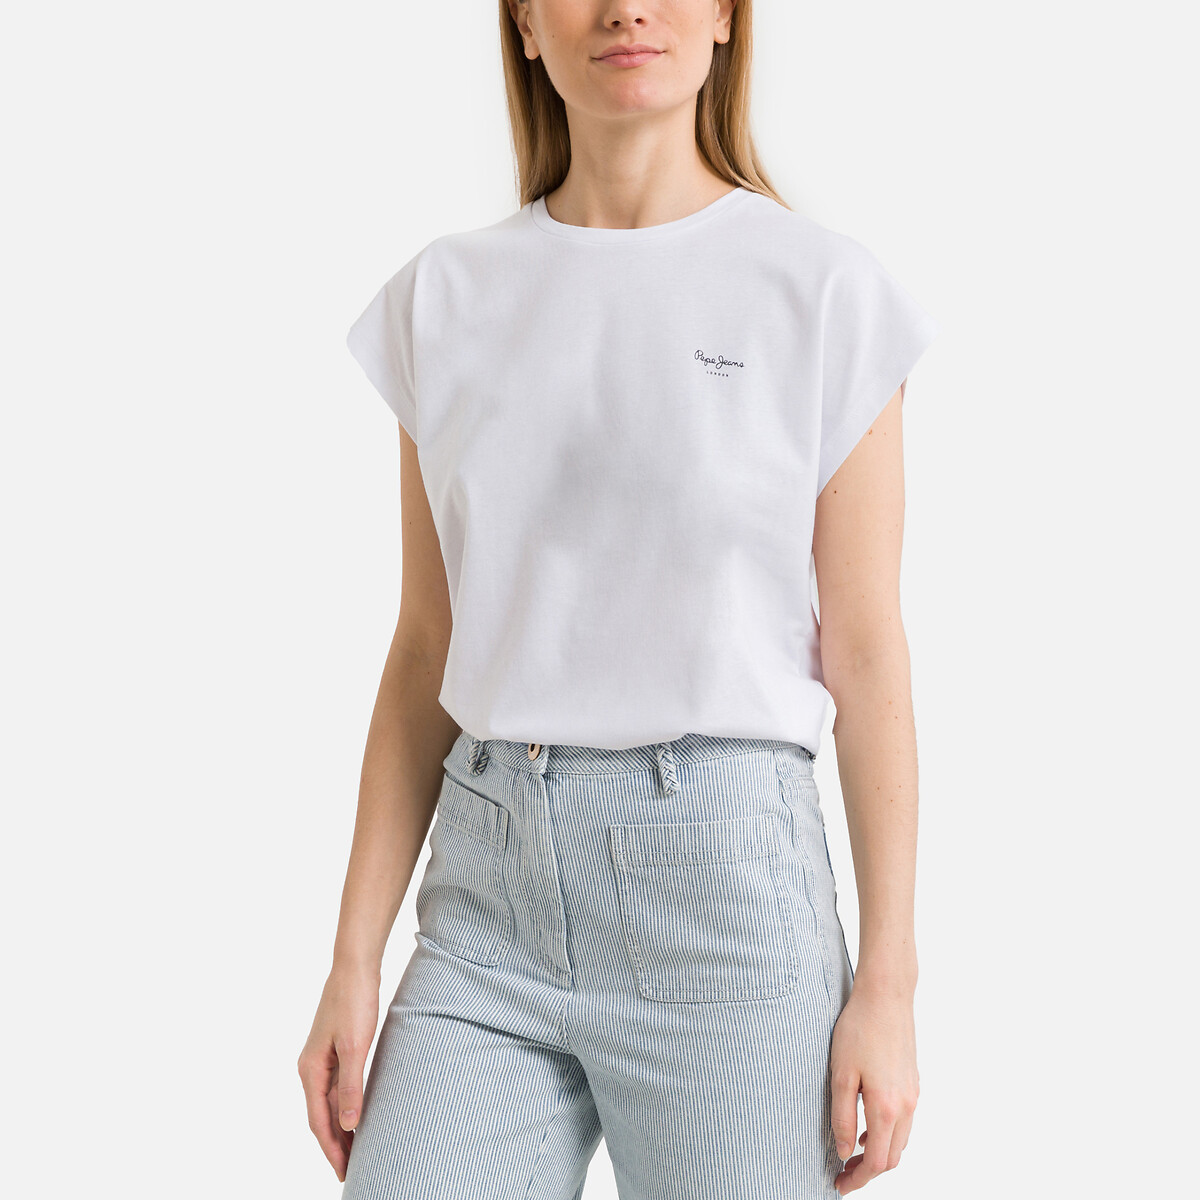 женская футболка с коротким рукавом laredoute, белая